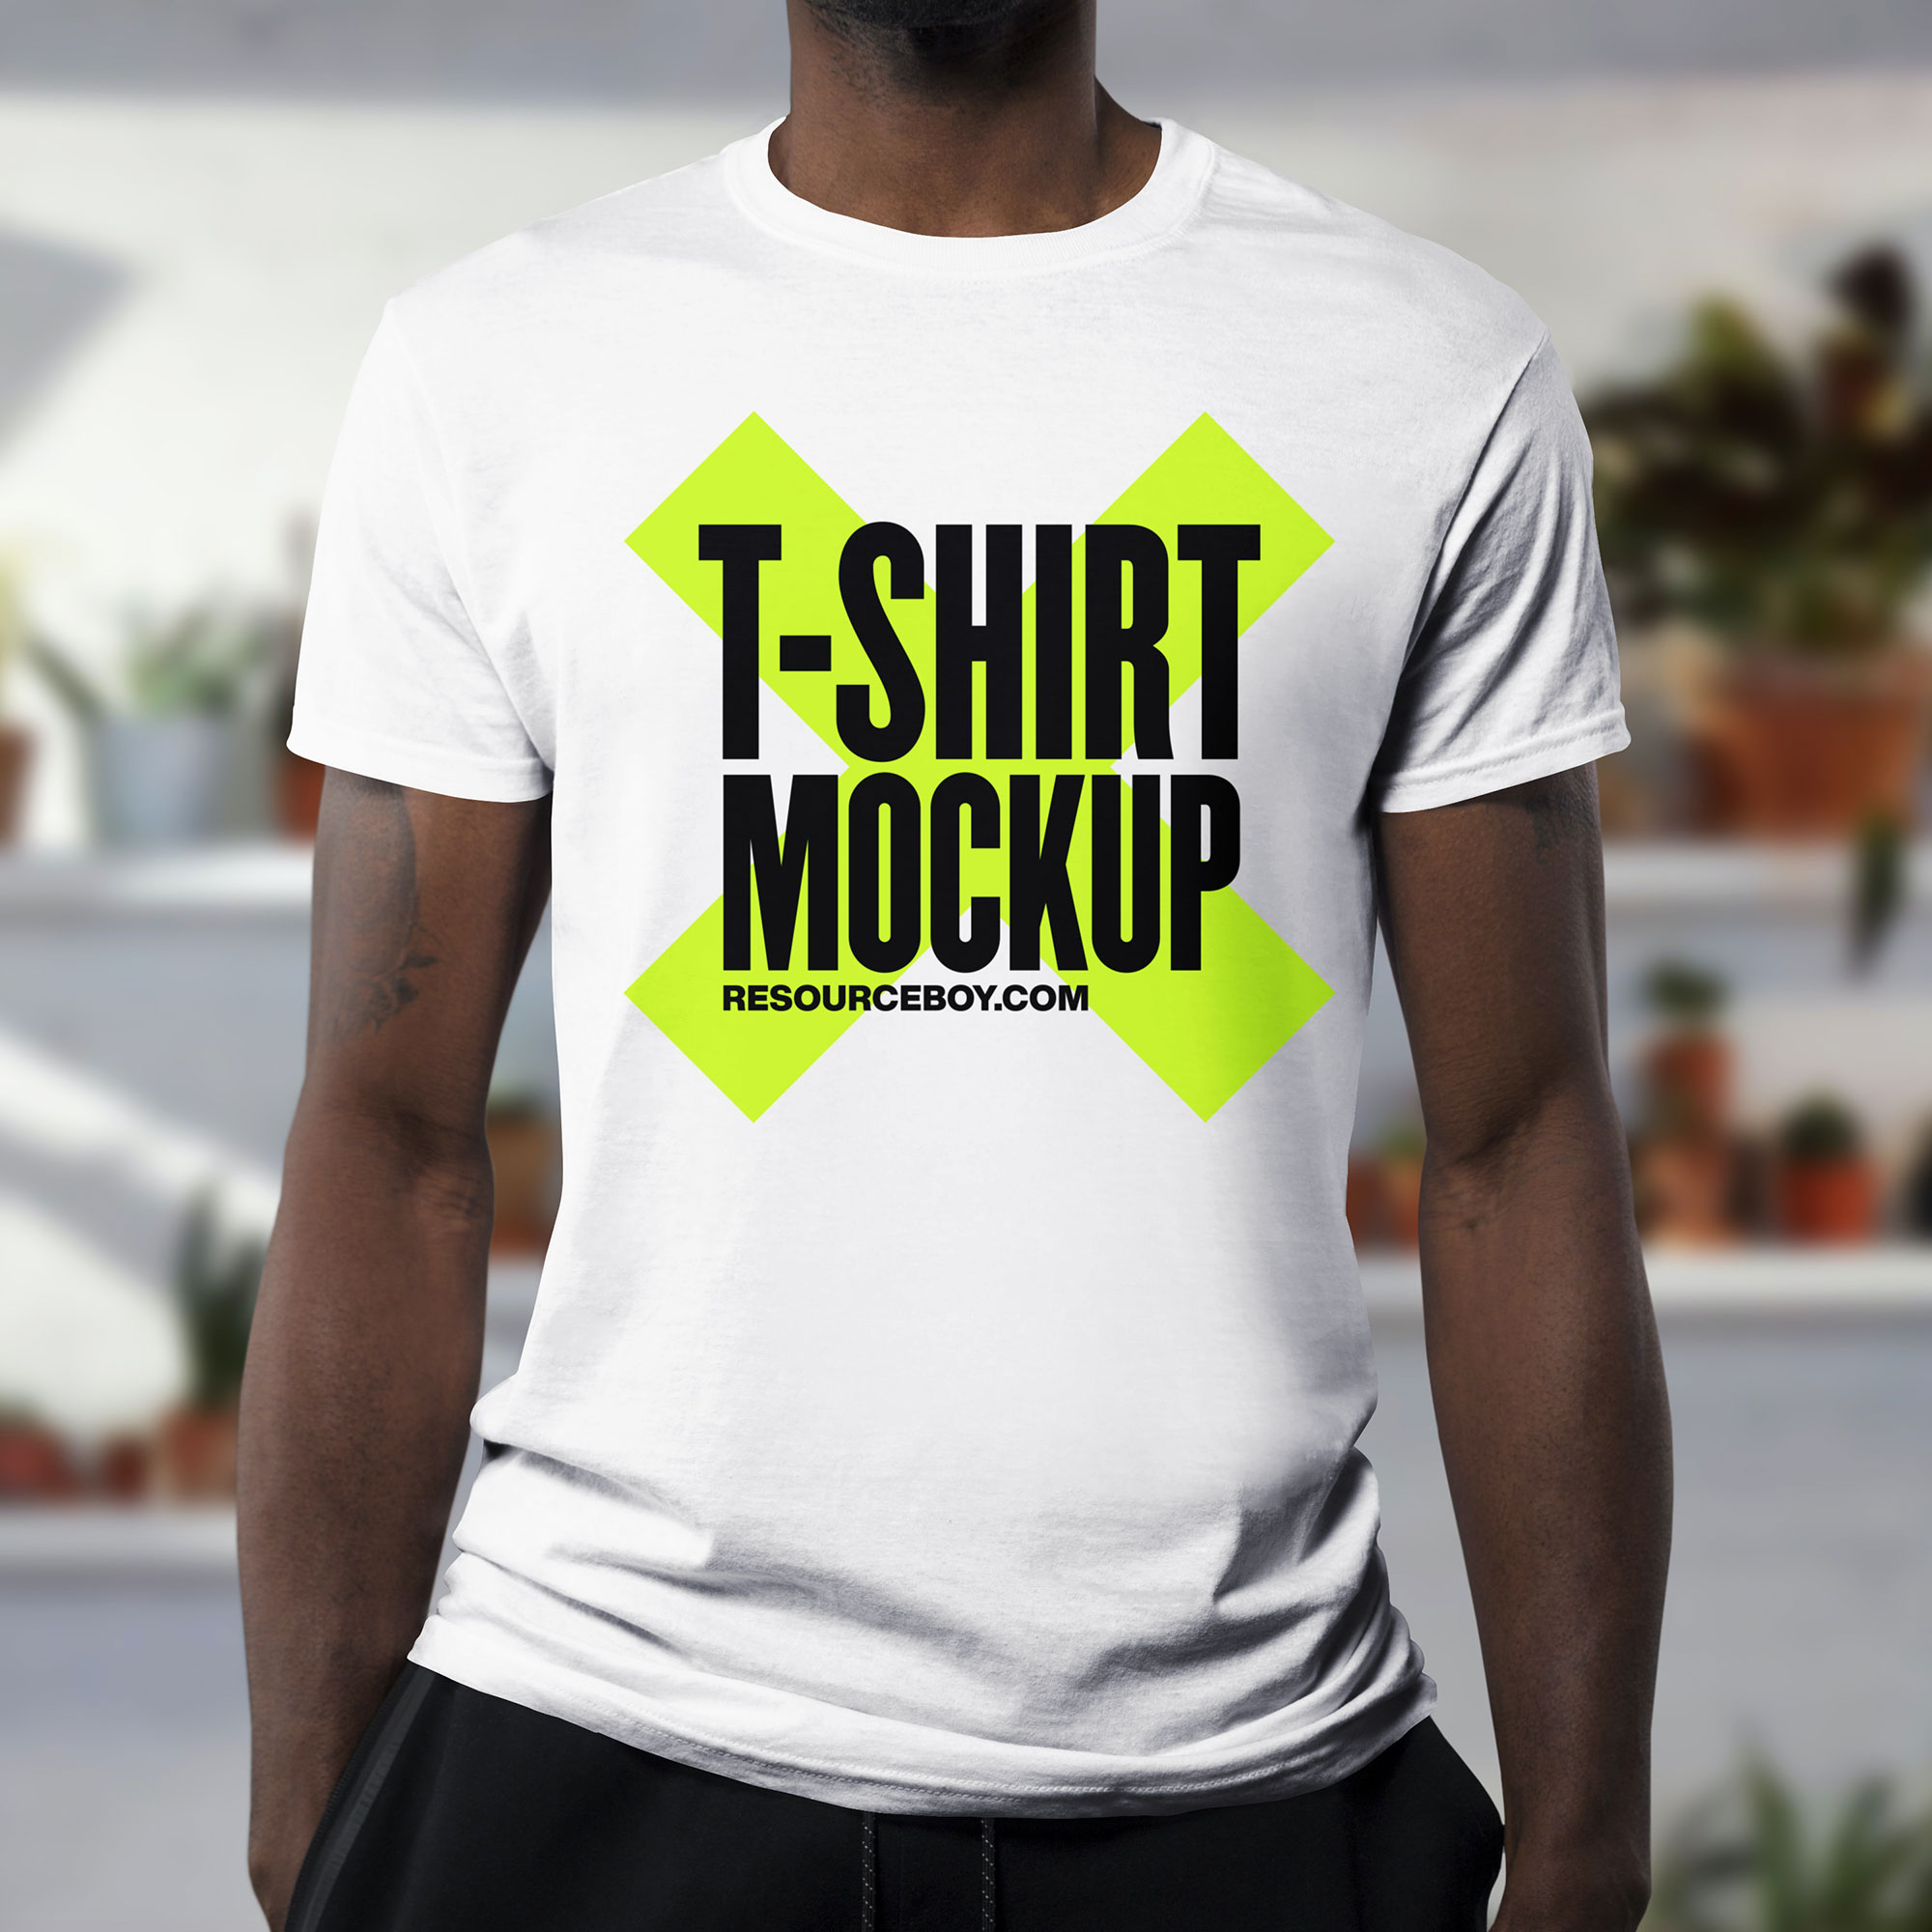 Free Men's T-Shirt Mockup (PSD)